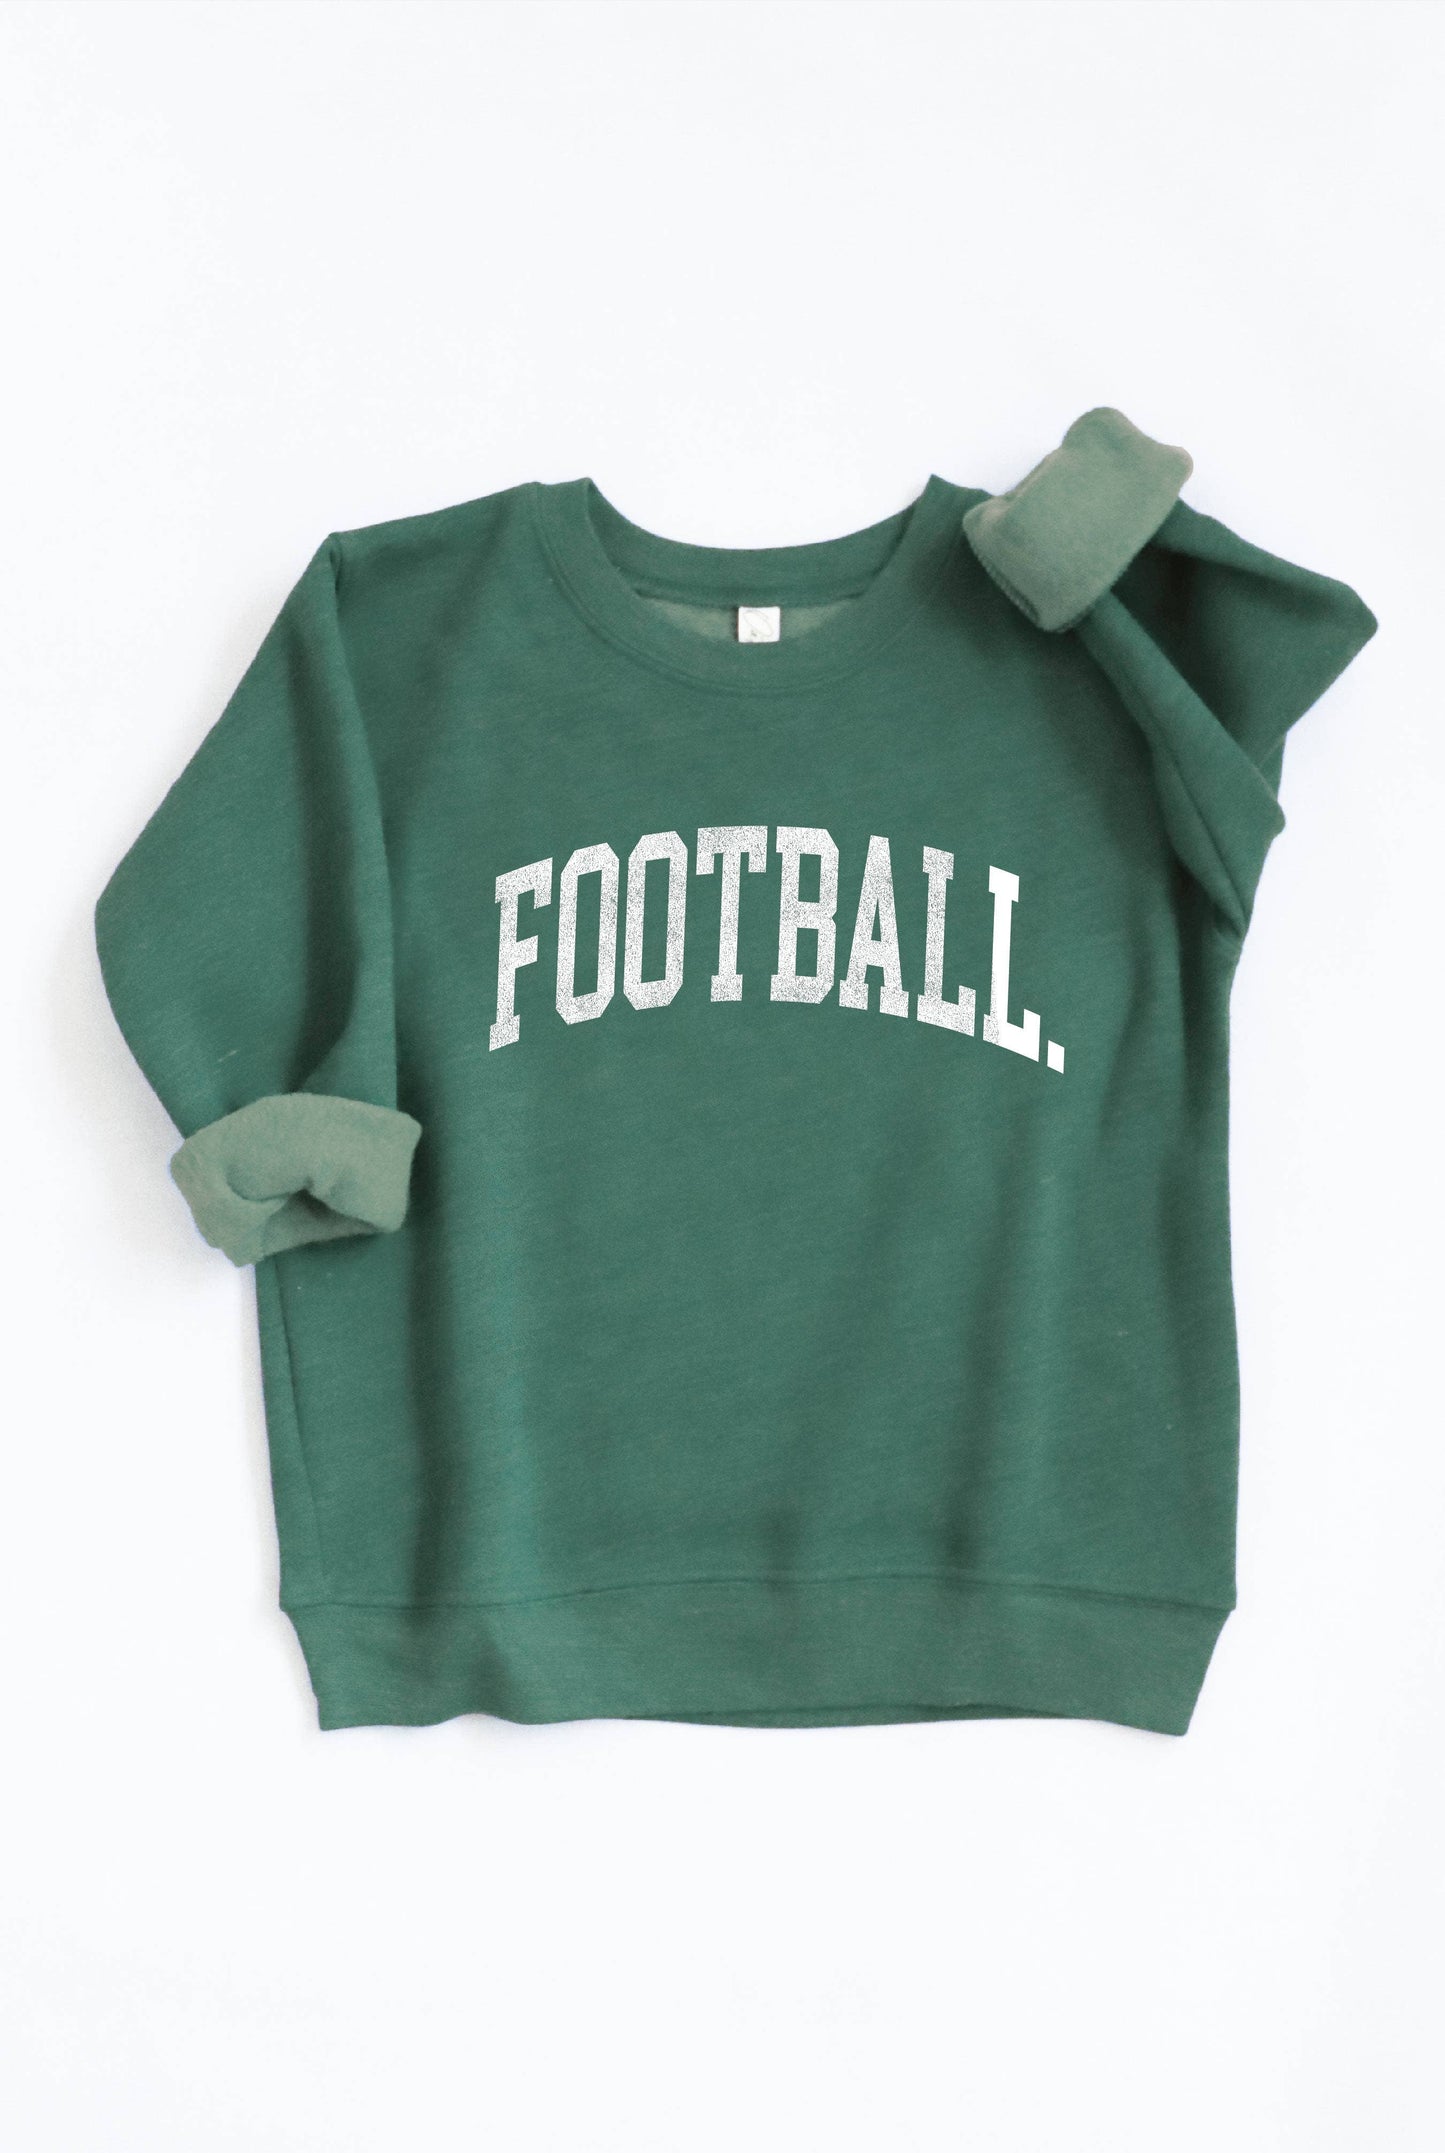 "Football" Toddler Unisex Graphic Sweatshirt